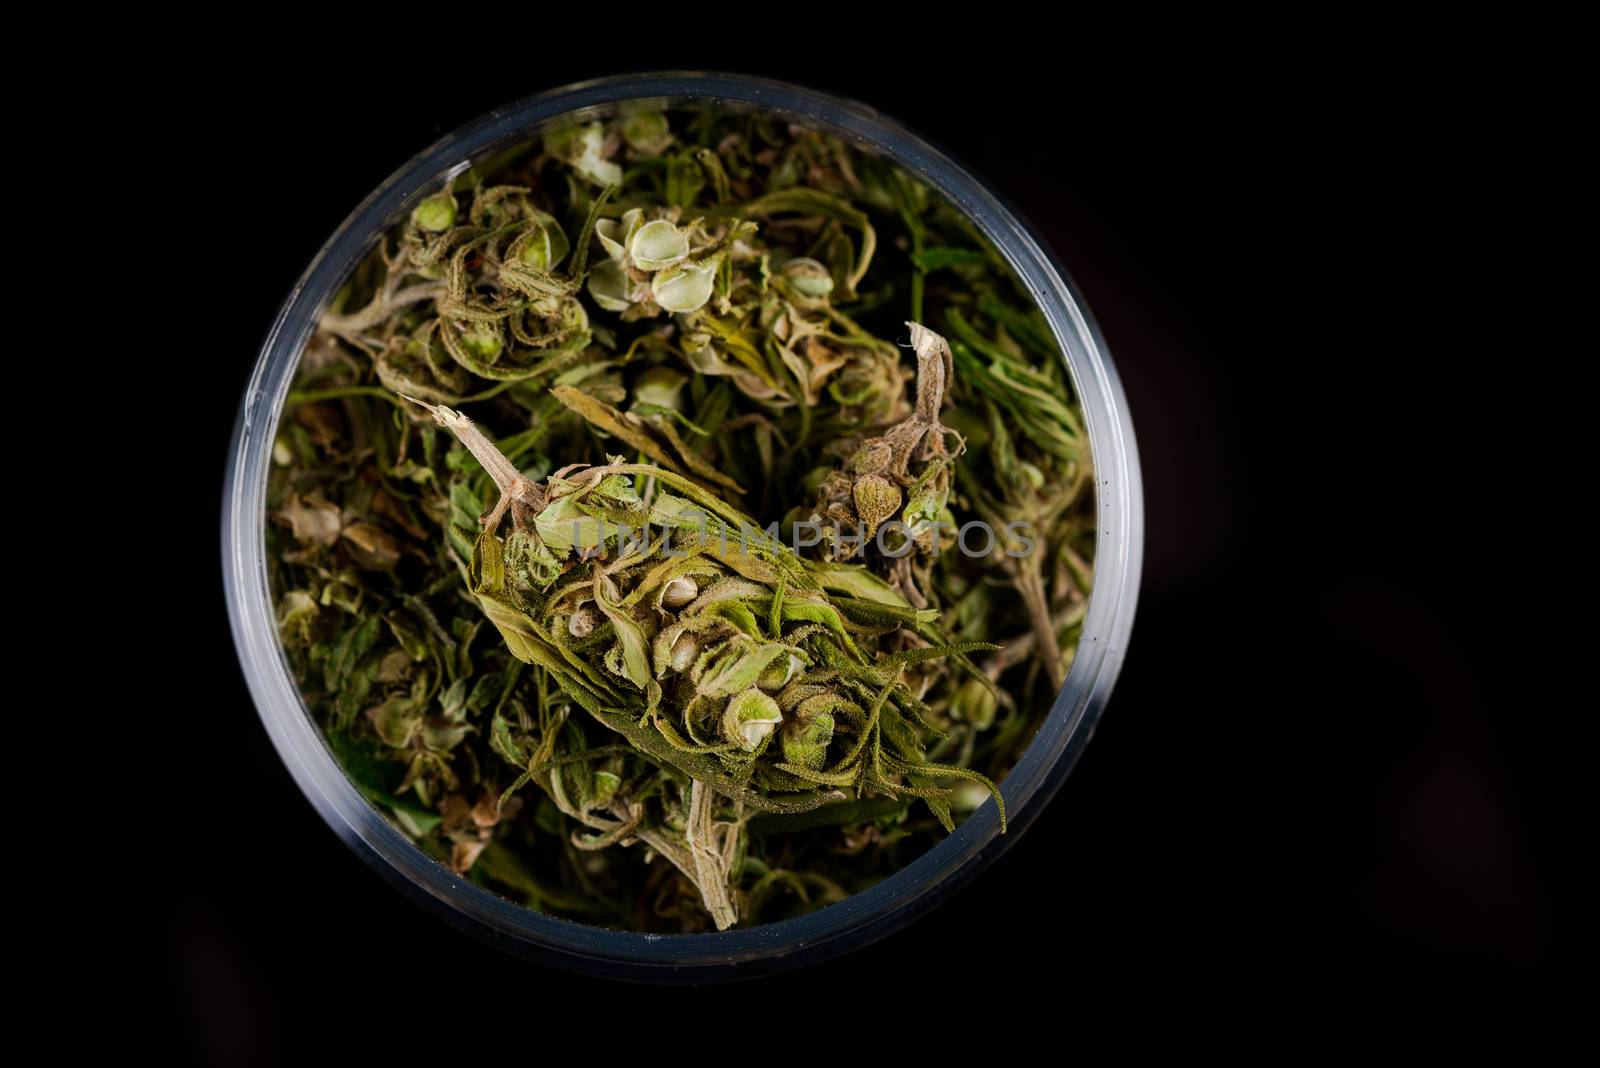 Cannabis Flower Buds in Glass Jar, Top Down Close Up. Dark Background. Medical Marijuana Concept.